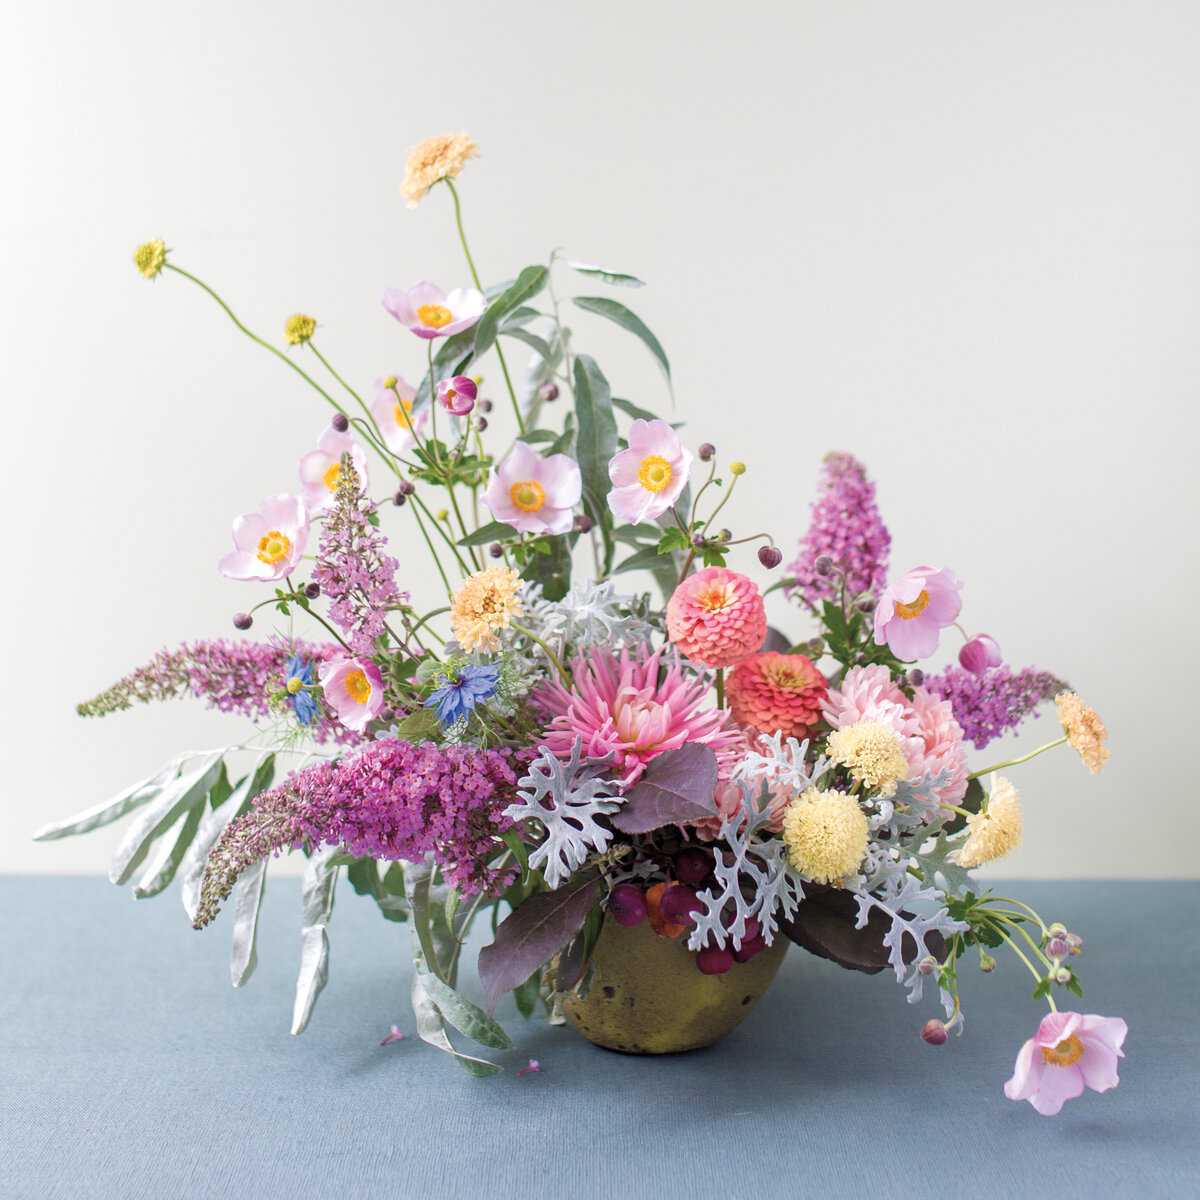 Atelier-Carmel-Wedding-Florist-GALLERY-Arrangements-10